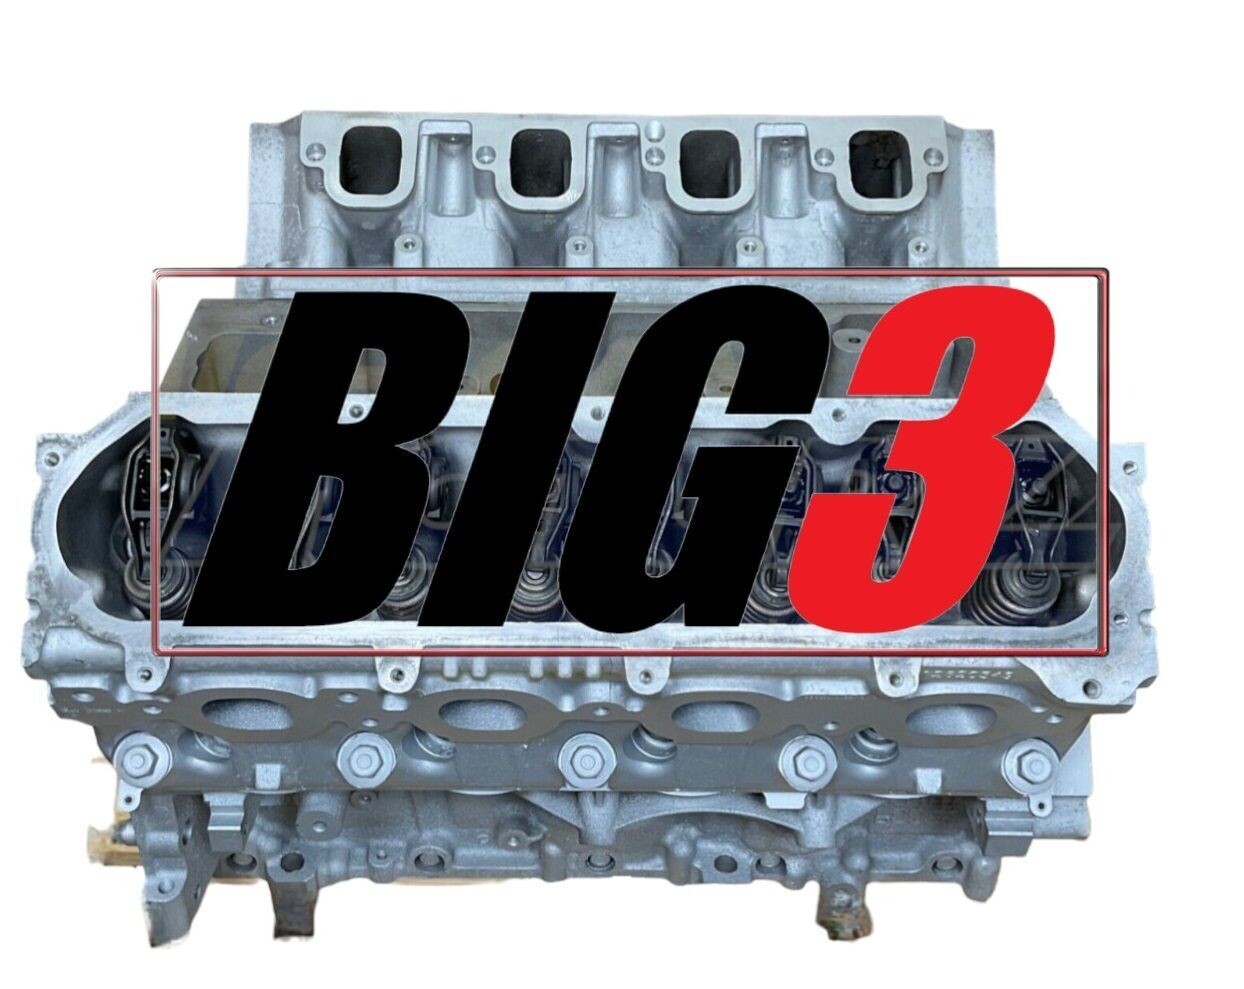 L87 GEN V ECOTEC3 6.2 ENGINE LONG BLOCK ASSEMBLY
2018 AND UP GM CHEVROLET AFM DELETED 4 YEAR PARTS WARRANTY